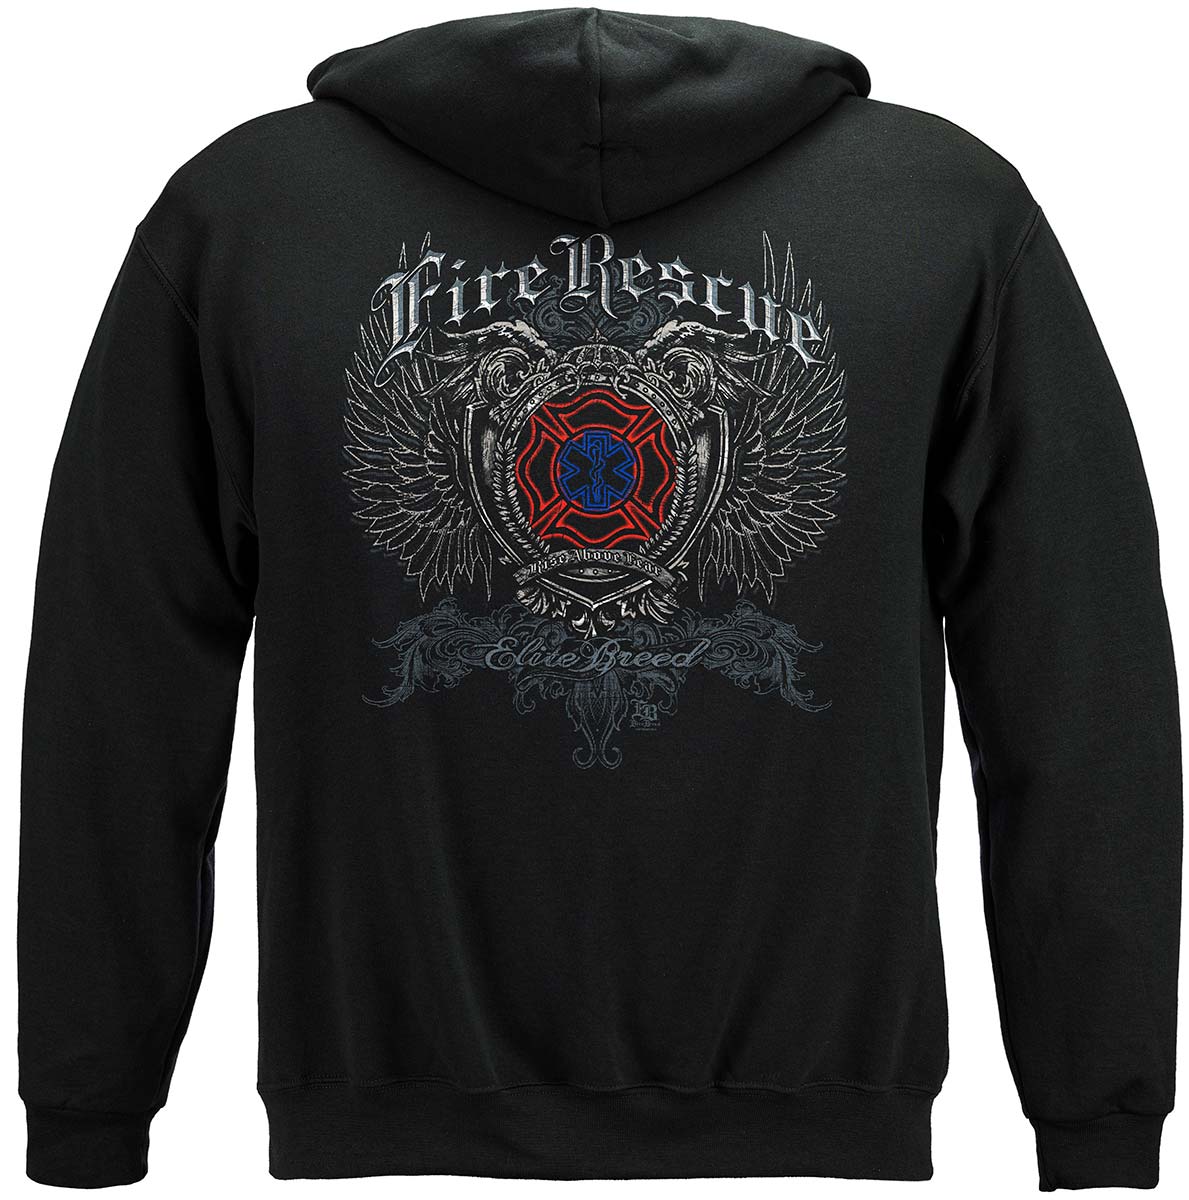 Elite Breed Fire Rescue Premium Hooded Sweat Shirt